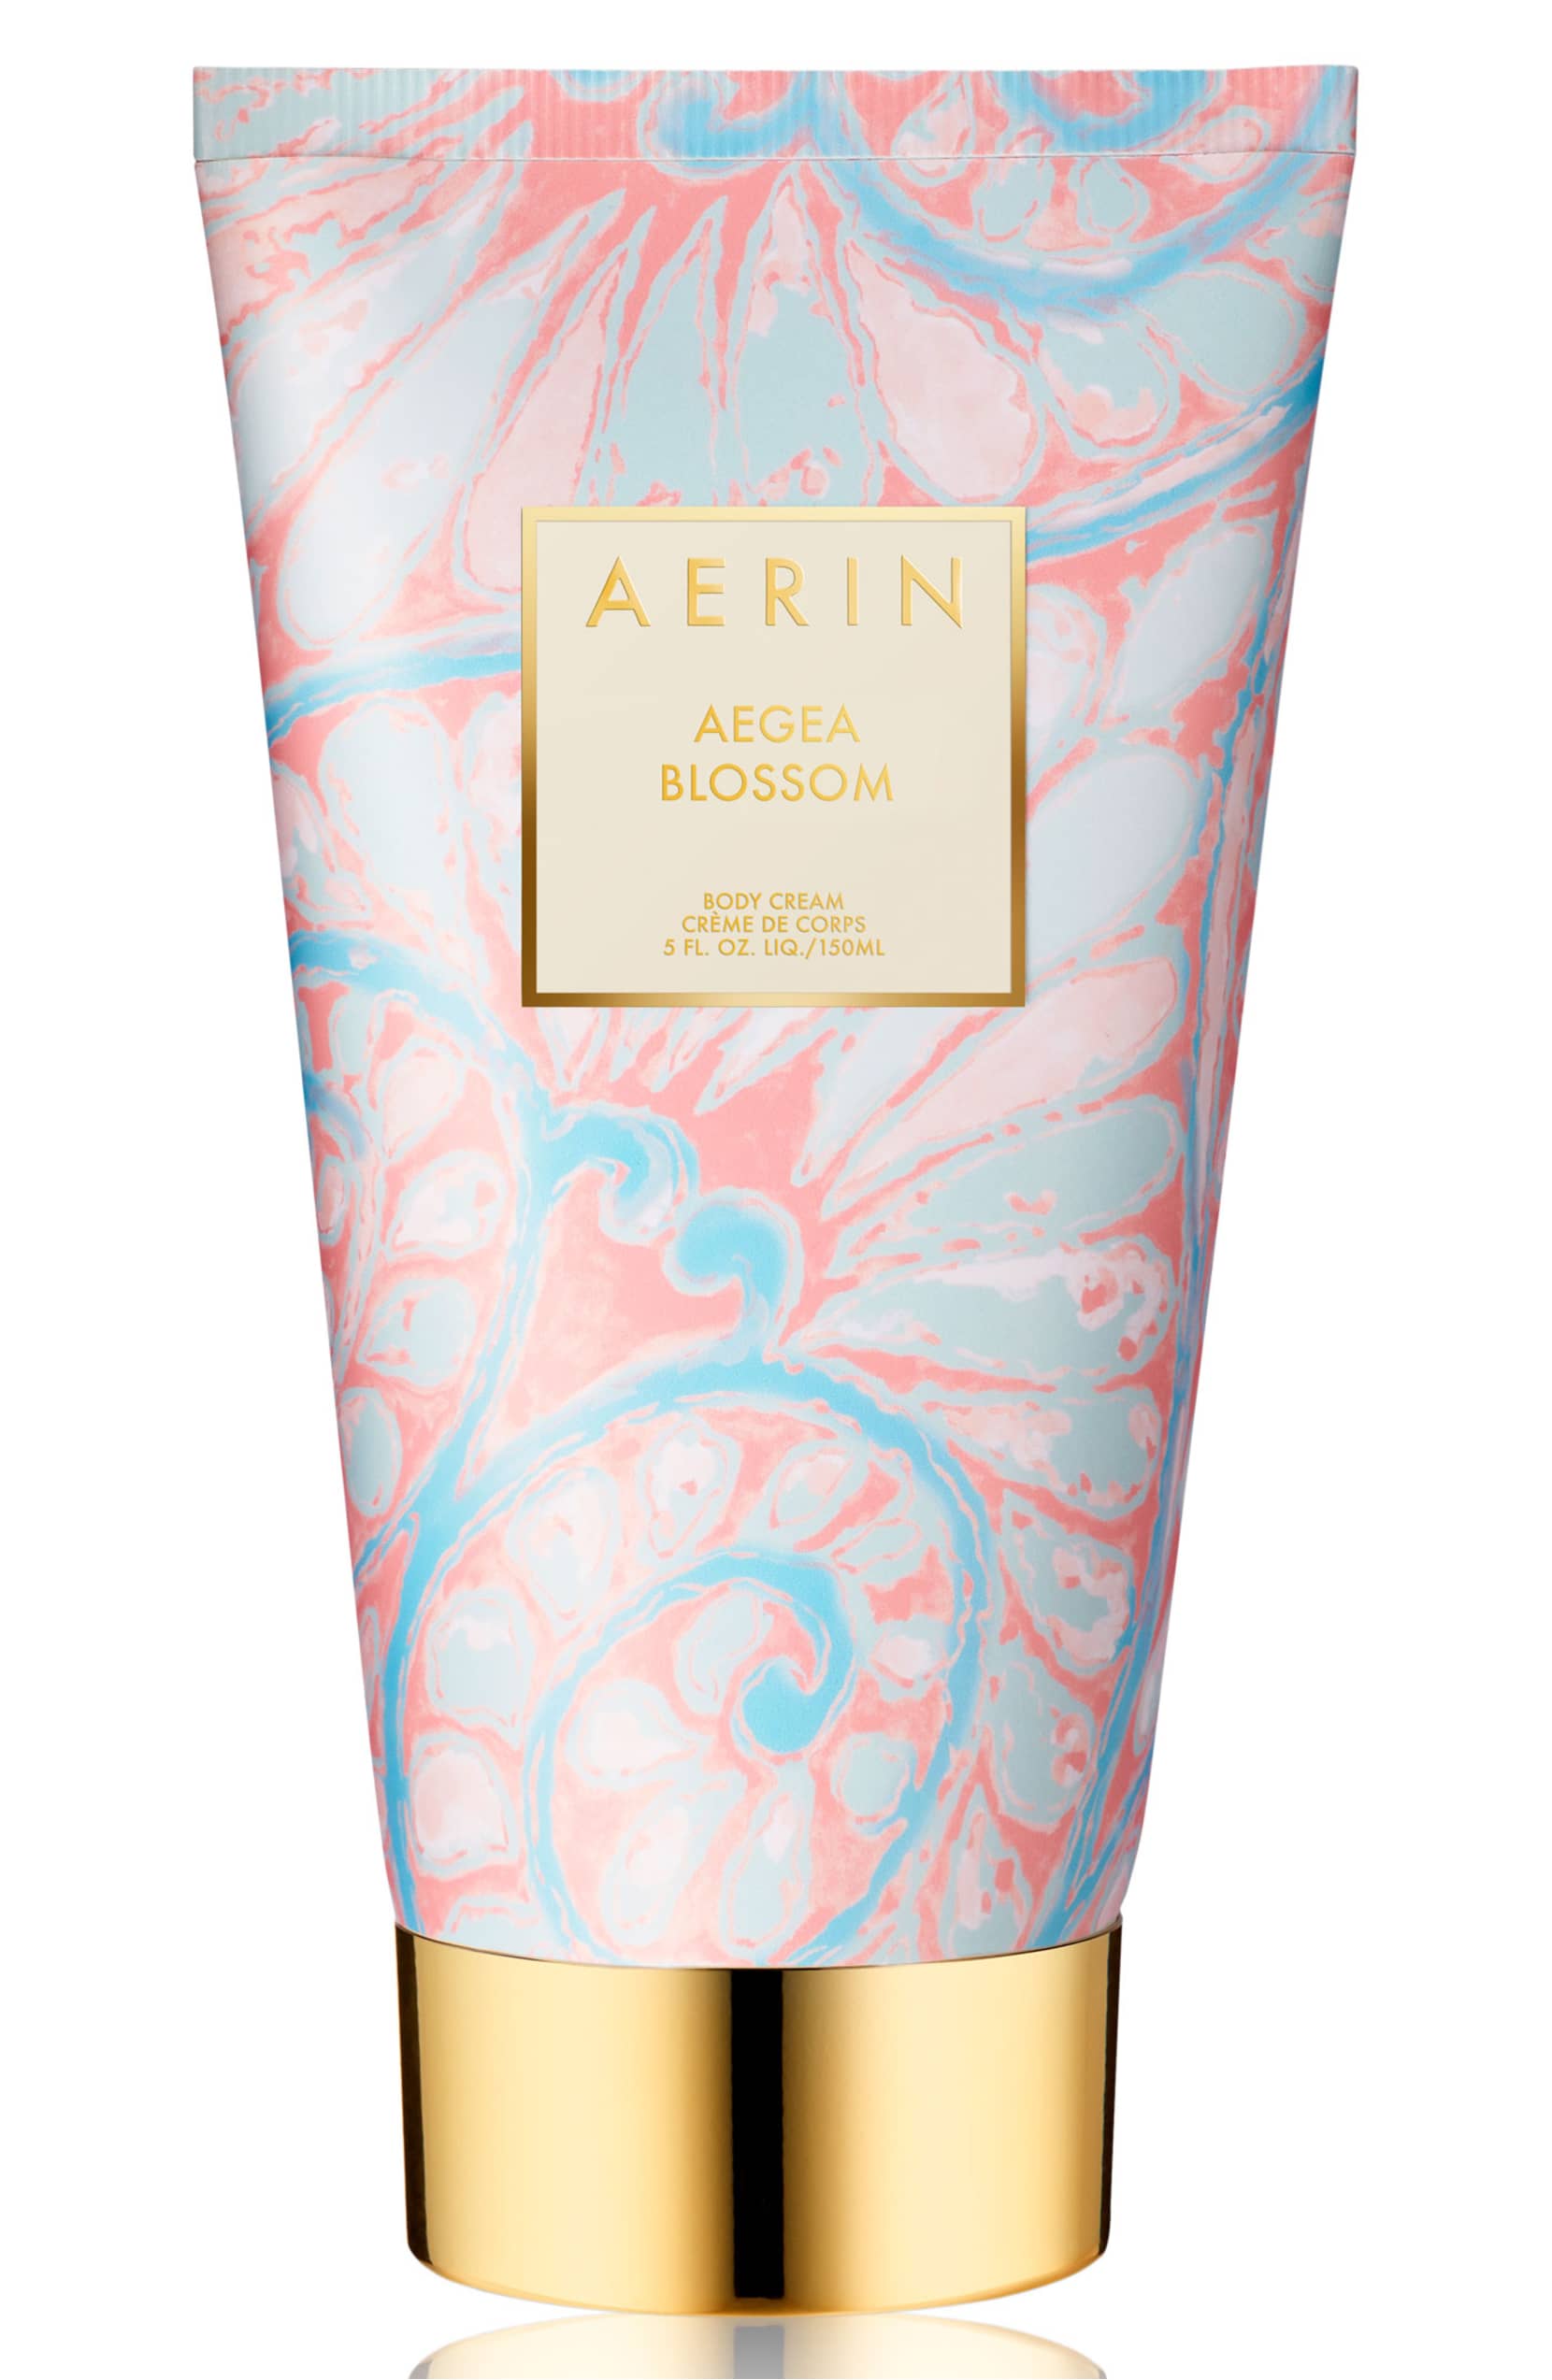 AERIN Beauty Aegea Blossom Body Cream - eCosmeticWorld